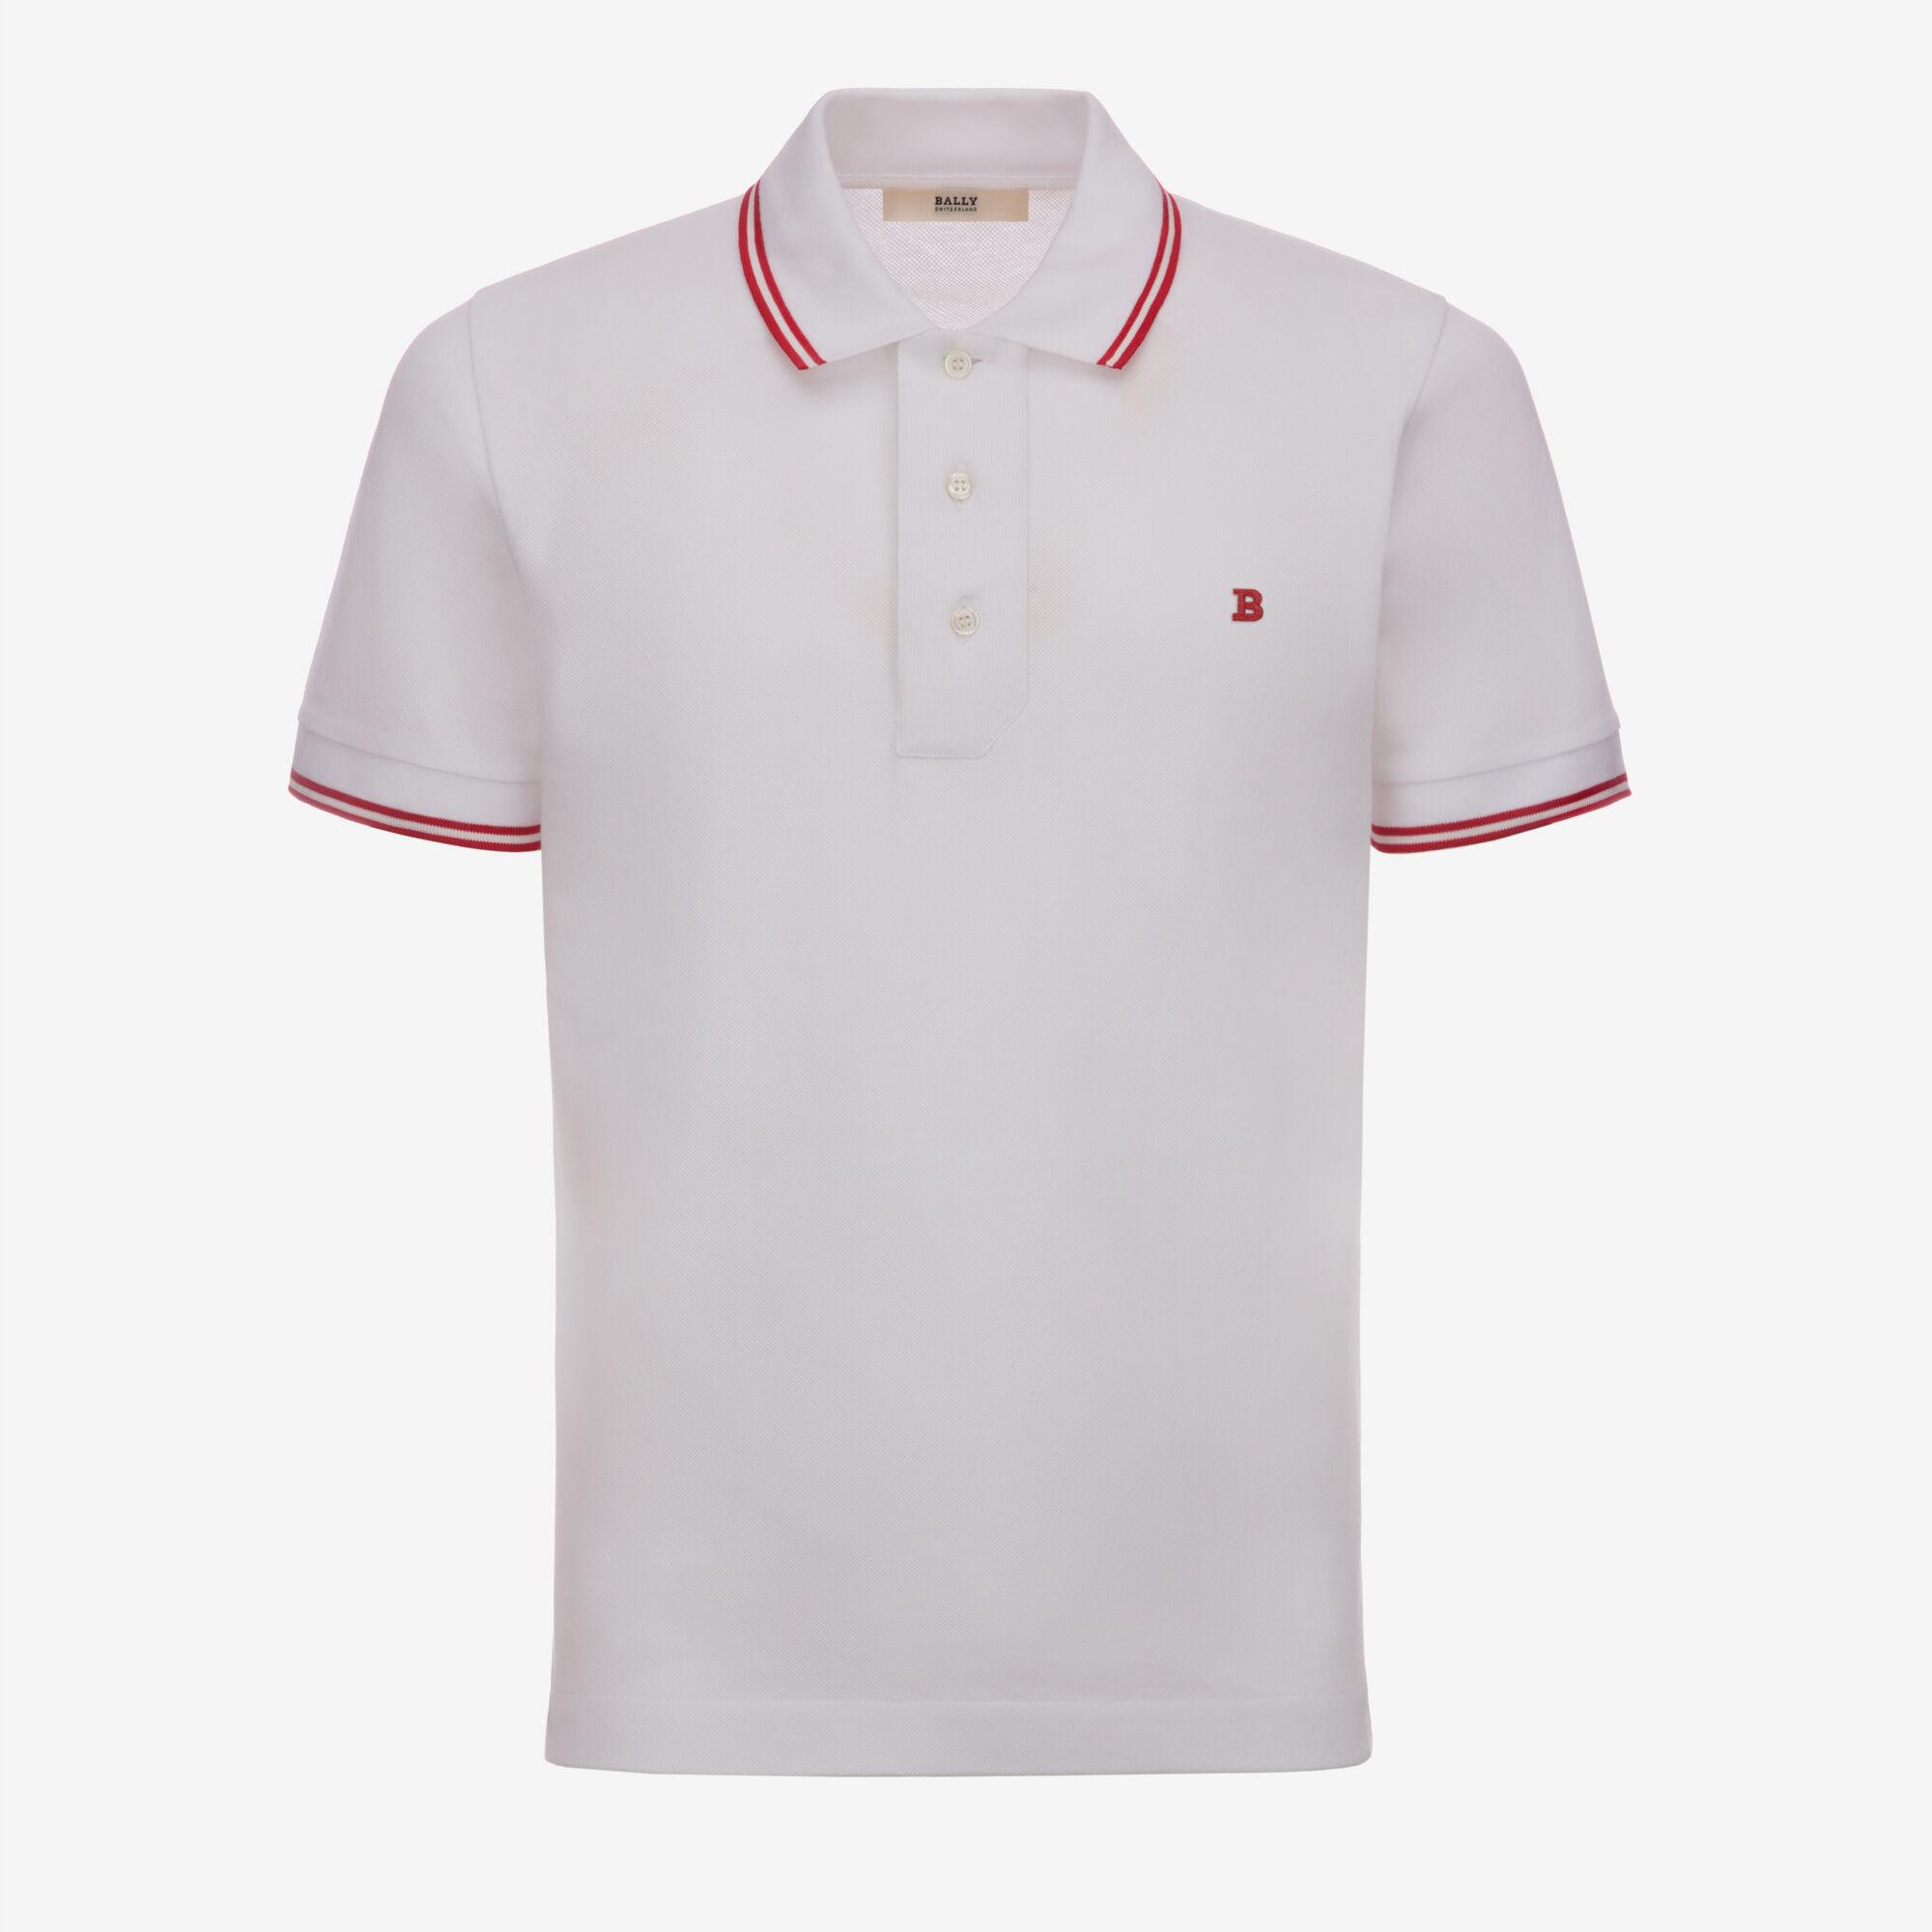 Bally Cotton Stripe Detail Polo Shirt in White for Men - Lyst